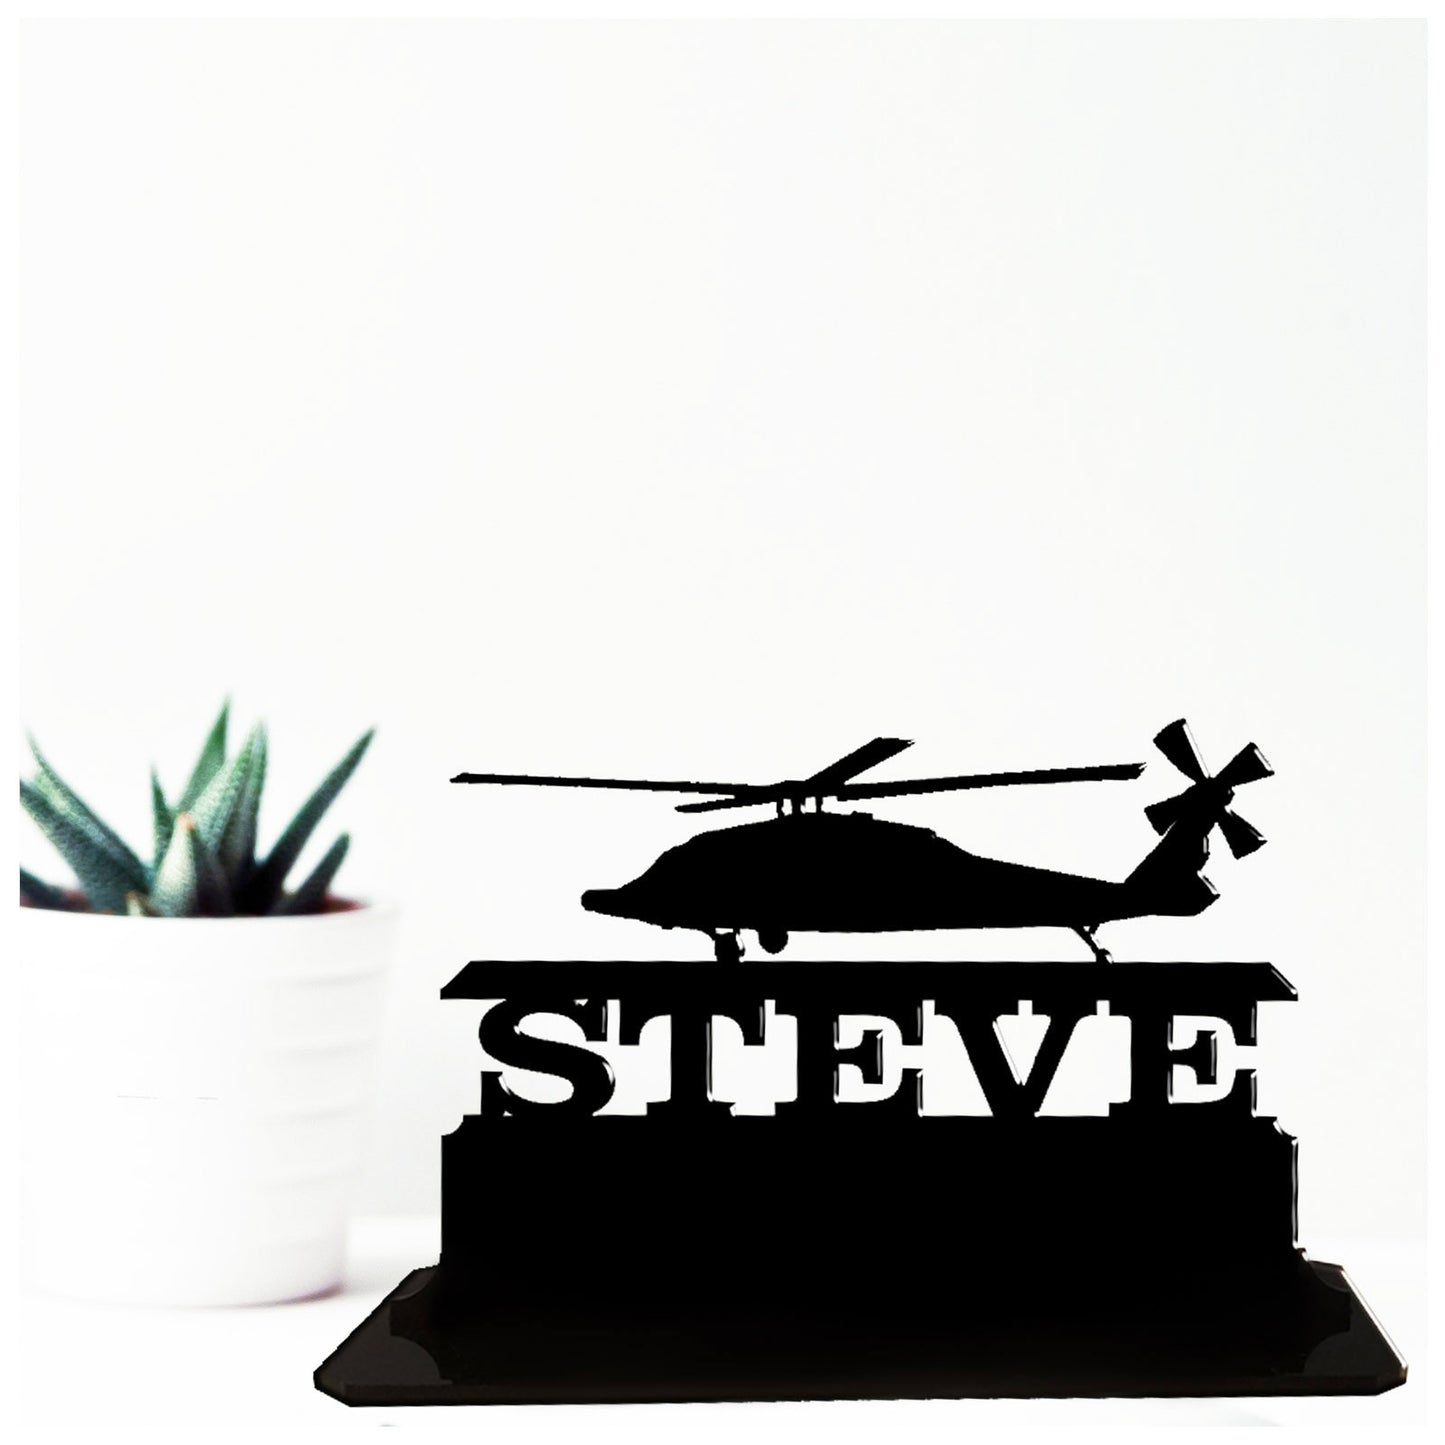 Acrylic personalised army Black Hawk hellicopter birthday gift ideas. Standalone keepsake ornaments.